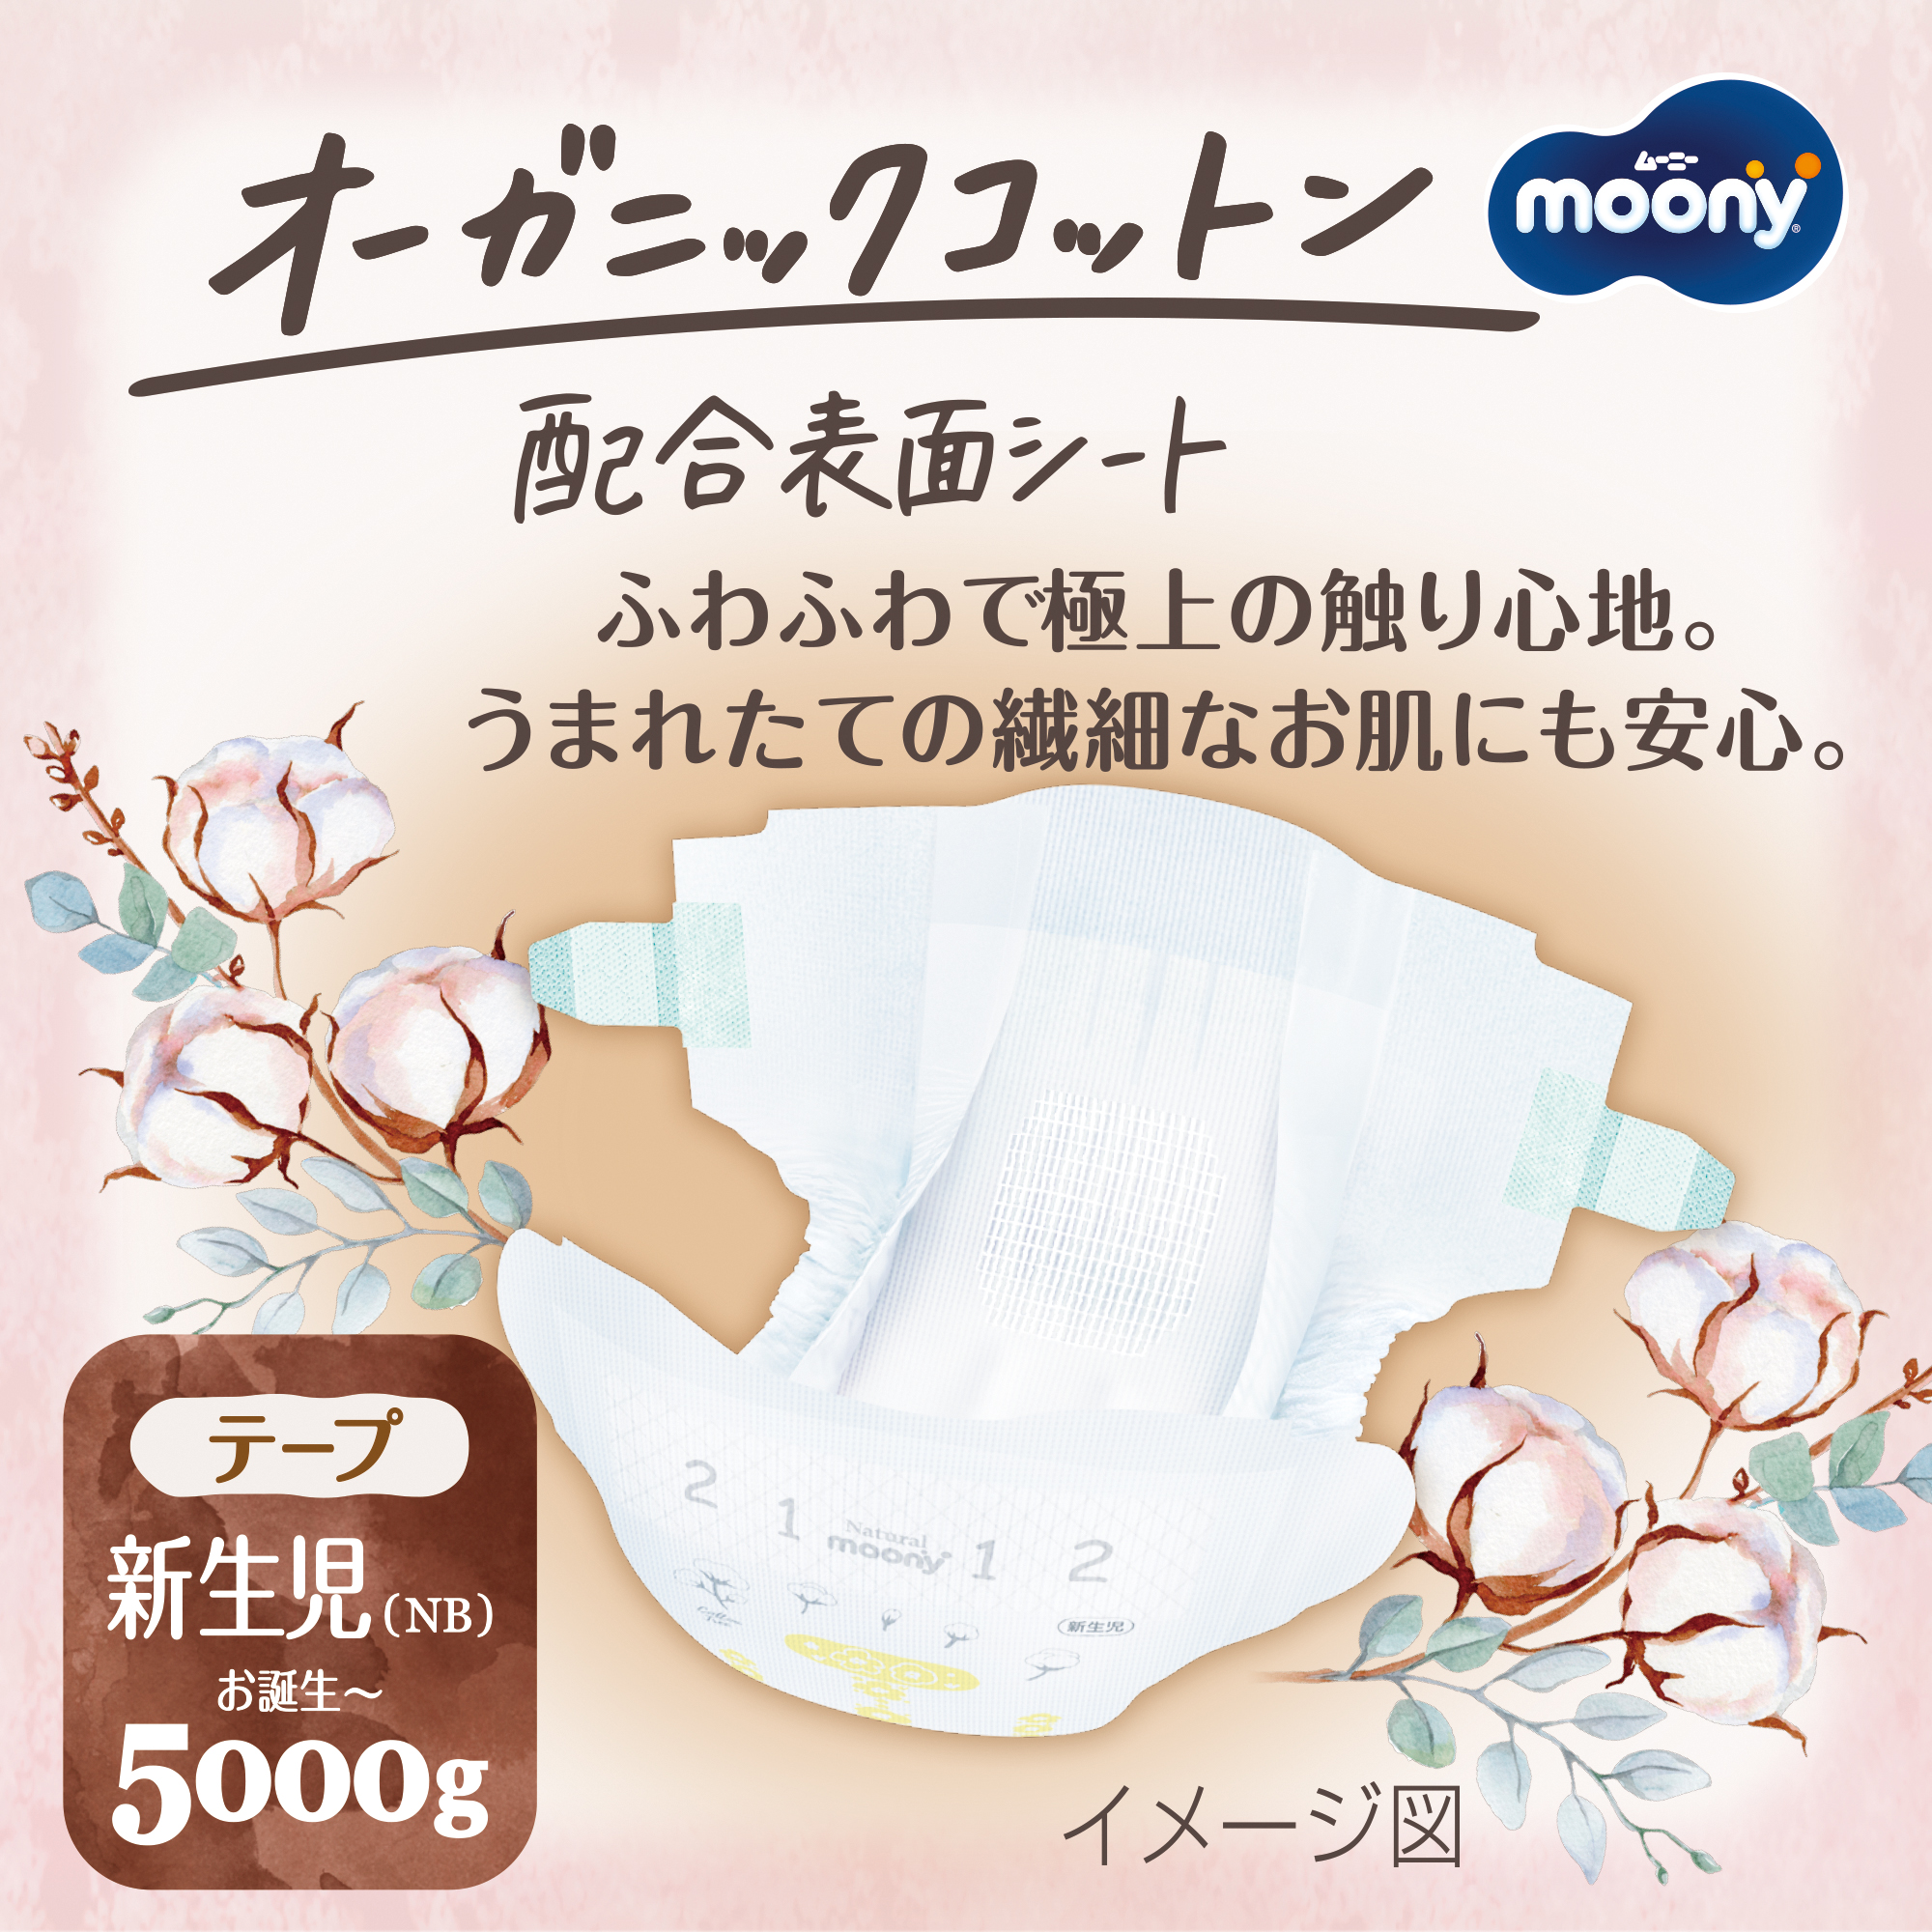 moony Natural オーガニクコットン62枚×4袋